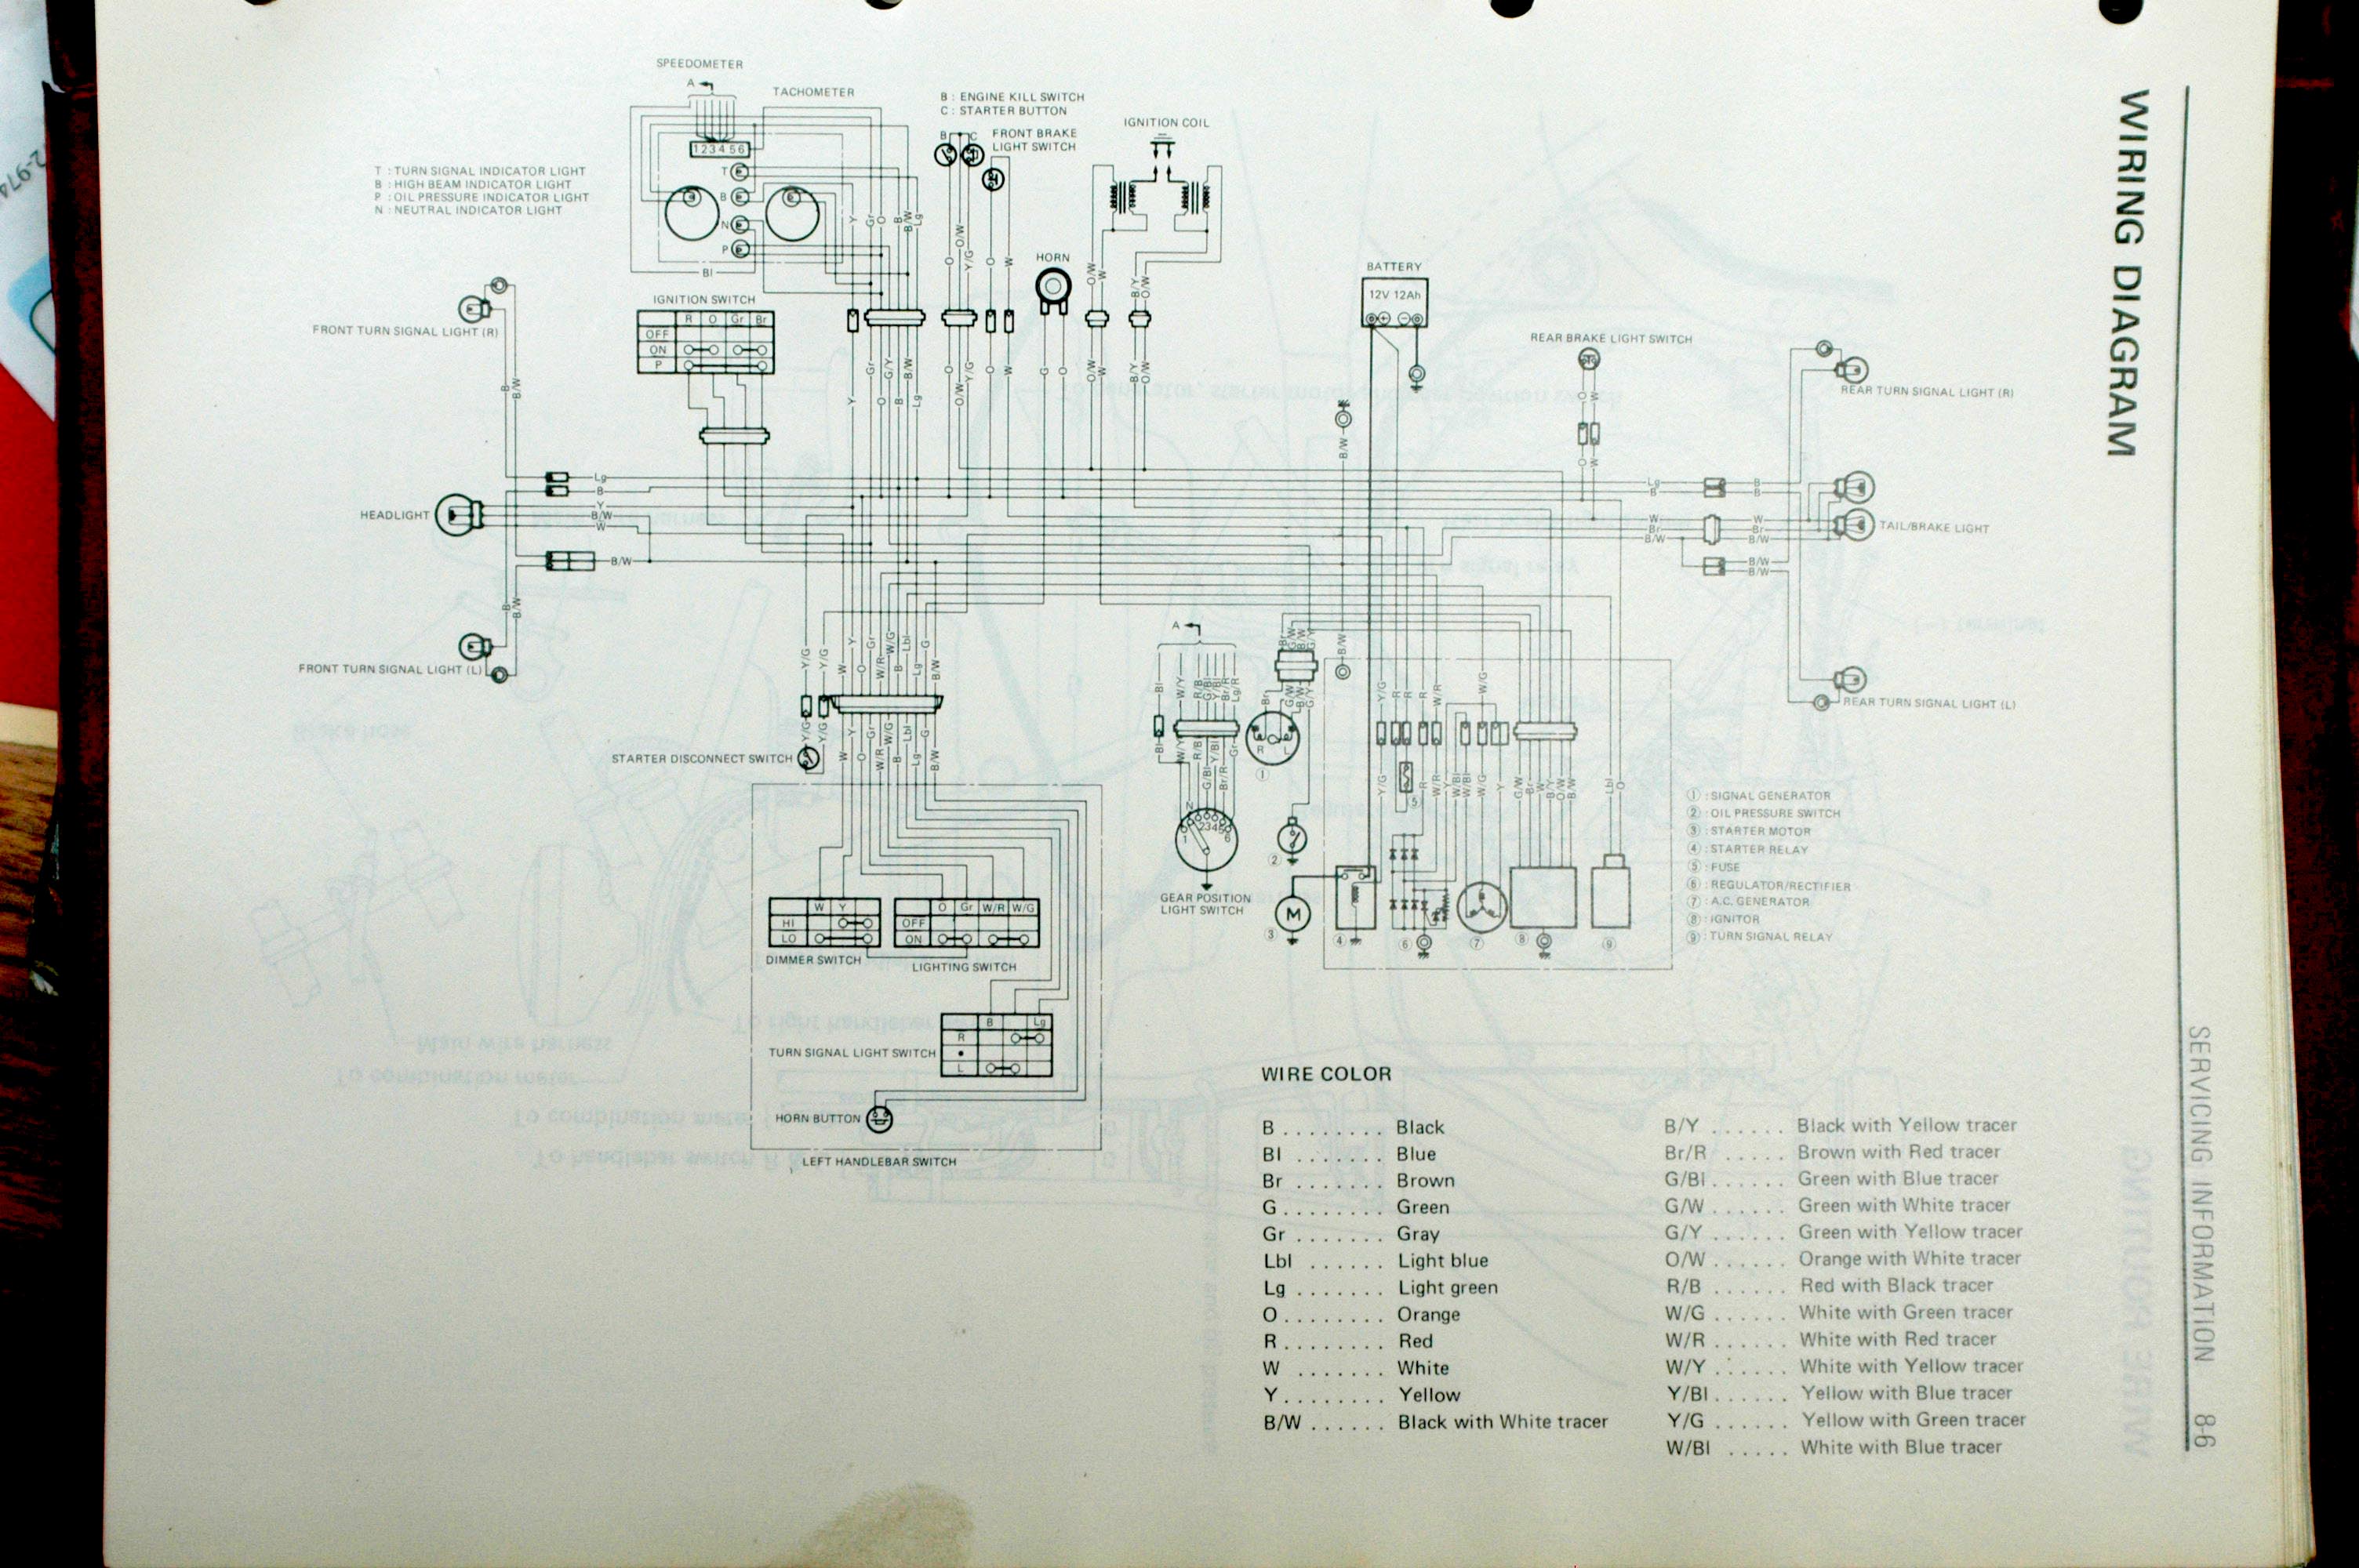 1981 Suzuki Gs450 Wiring Diagram from mahonkin.com